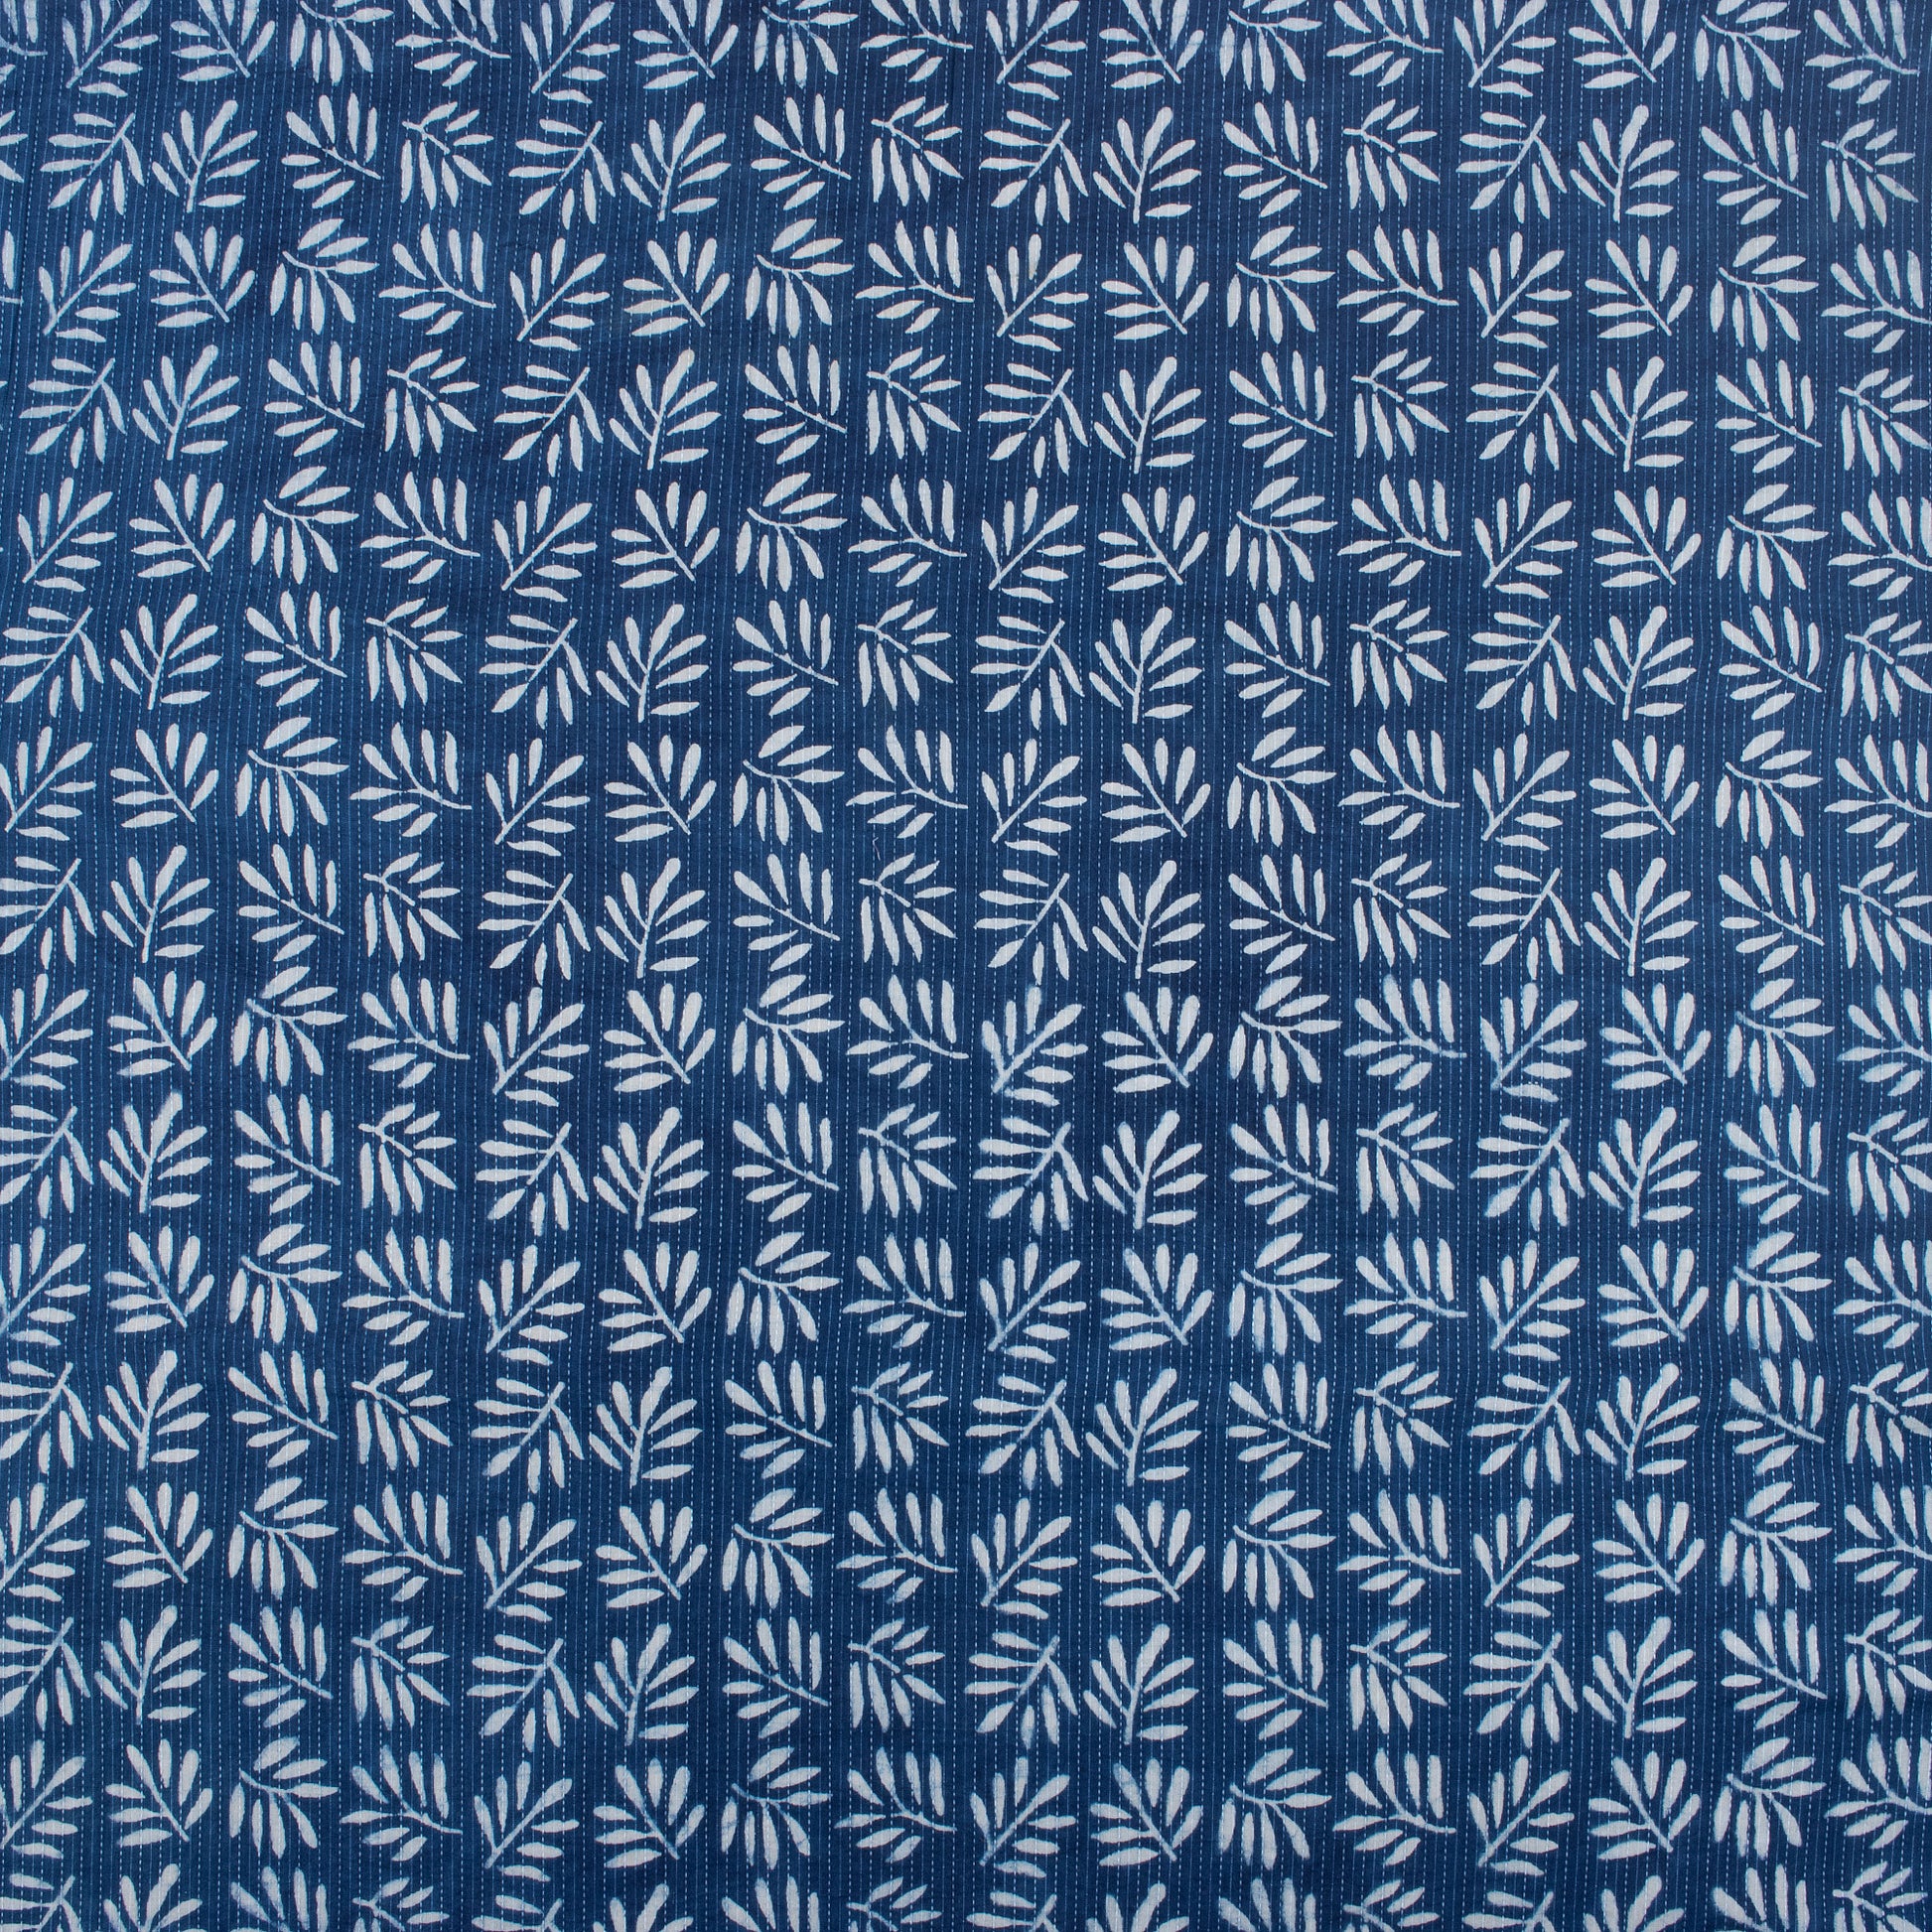 Indigo Leaf Block Printed Cotton Kantha Cloth Material Online